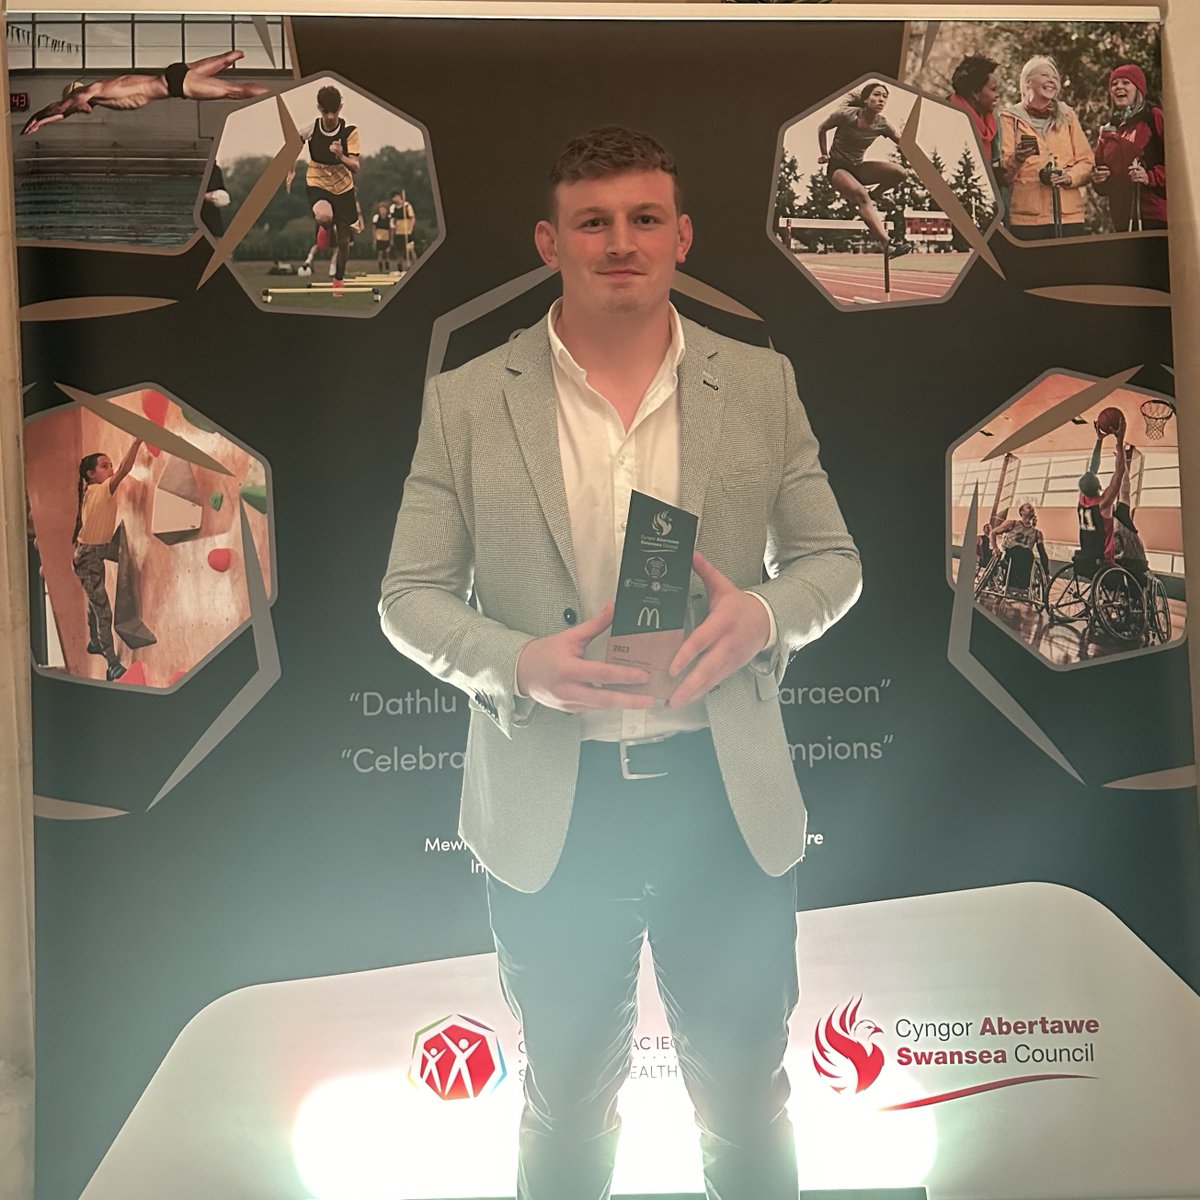 Congratulations to Jac Morgan, winner of Sportsperson of the Year sponsored by @McDonaldsuk 🏅